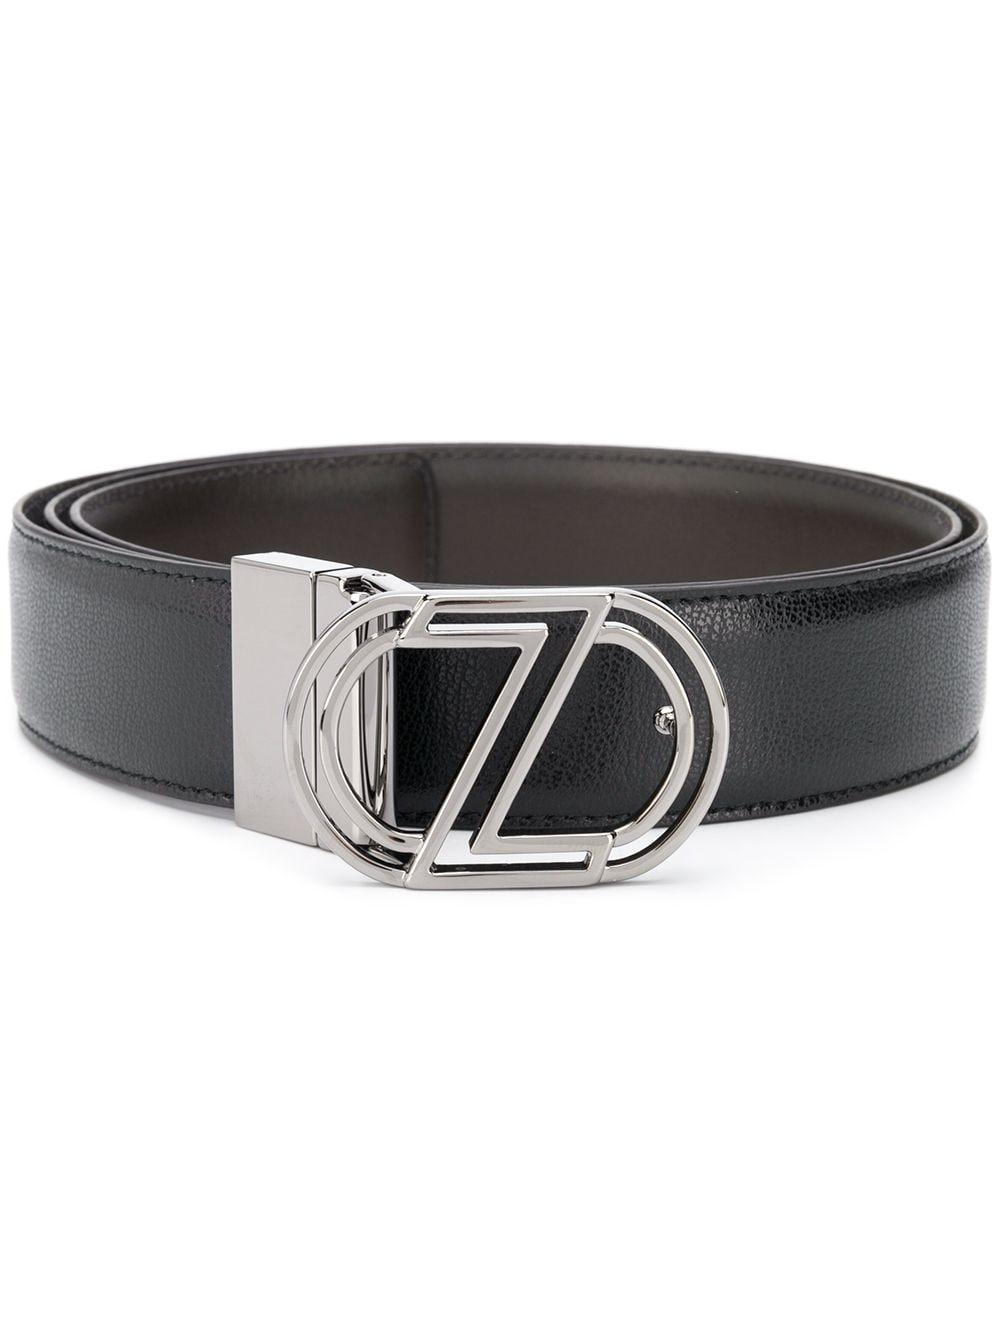 Z Zegna Logo Buckle Belt in Black for Men - Lyst